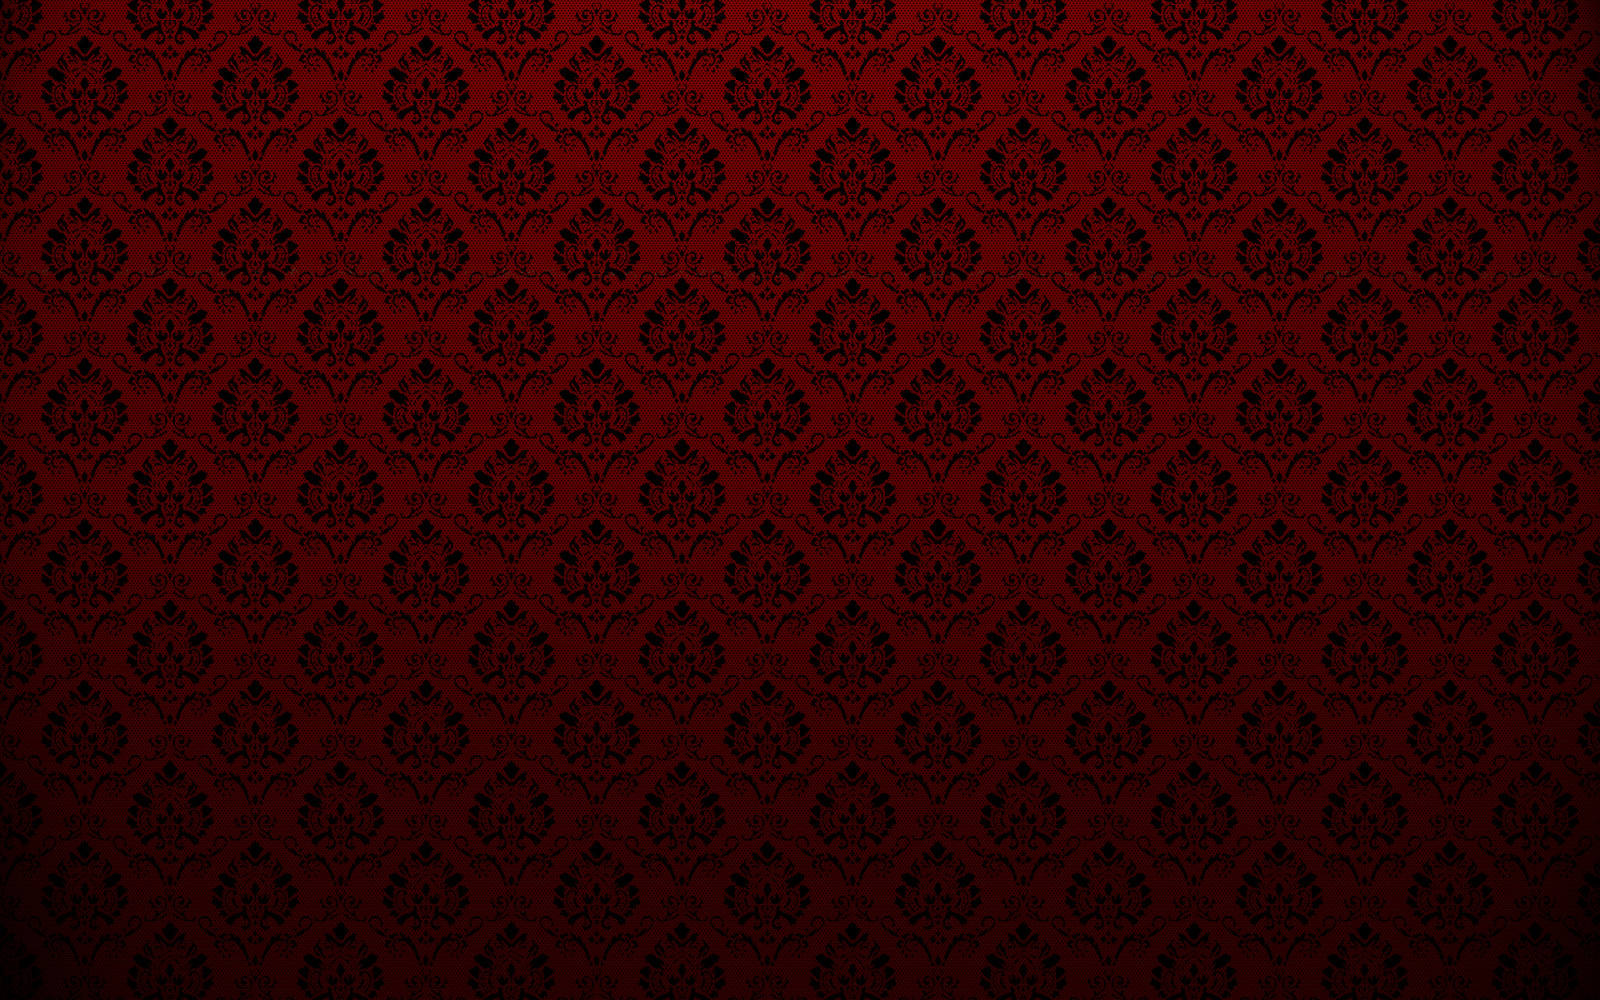 Red Textured Wallpaper